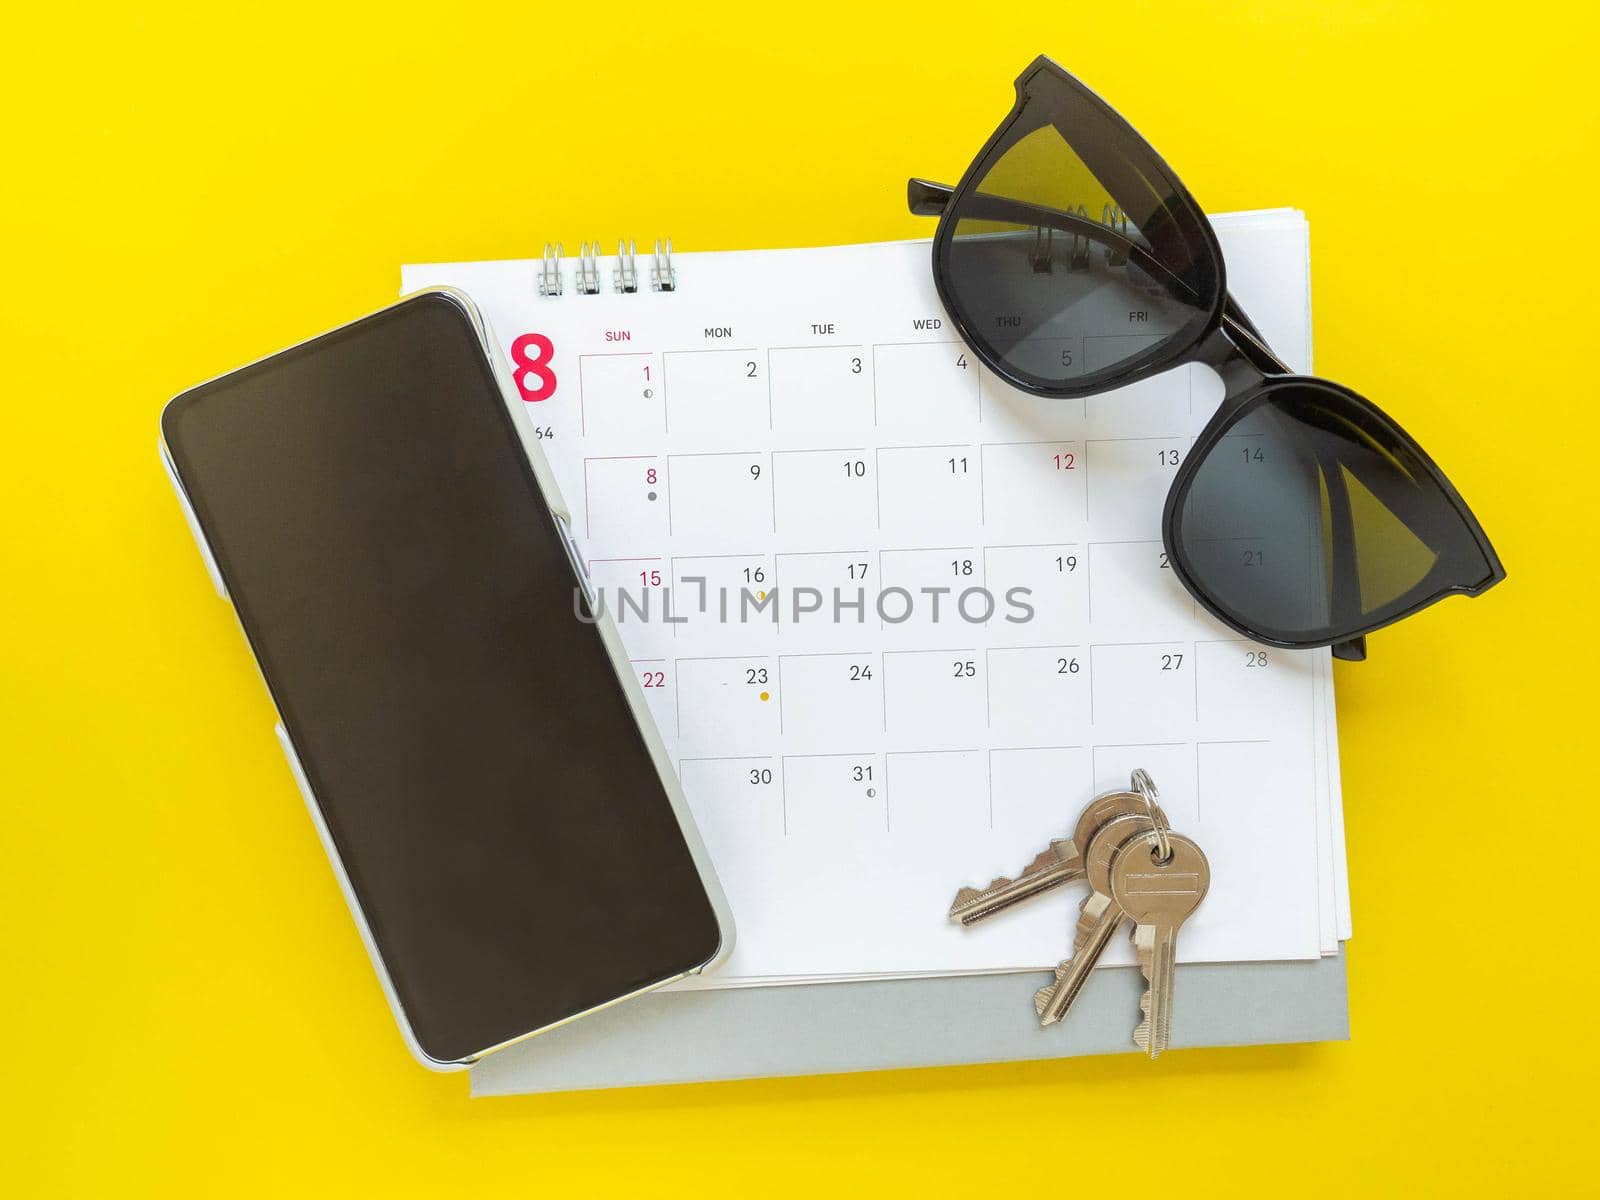 Dark glasses, keys, cell phone, and calendar prepare for departure. by Kulpreya